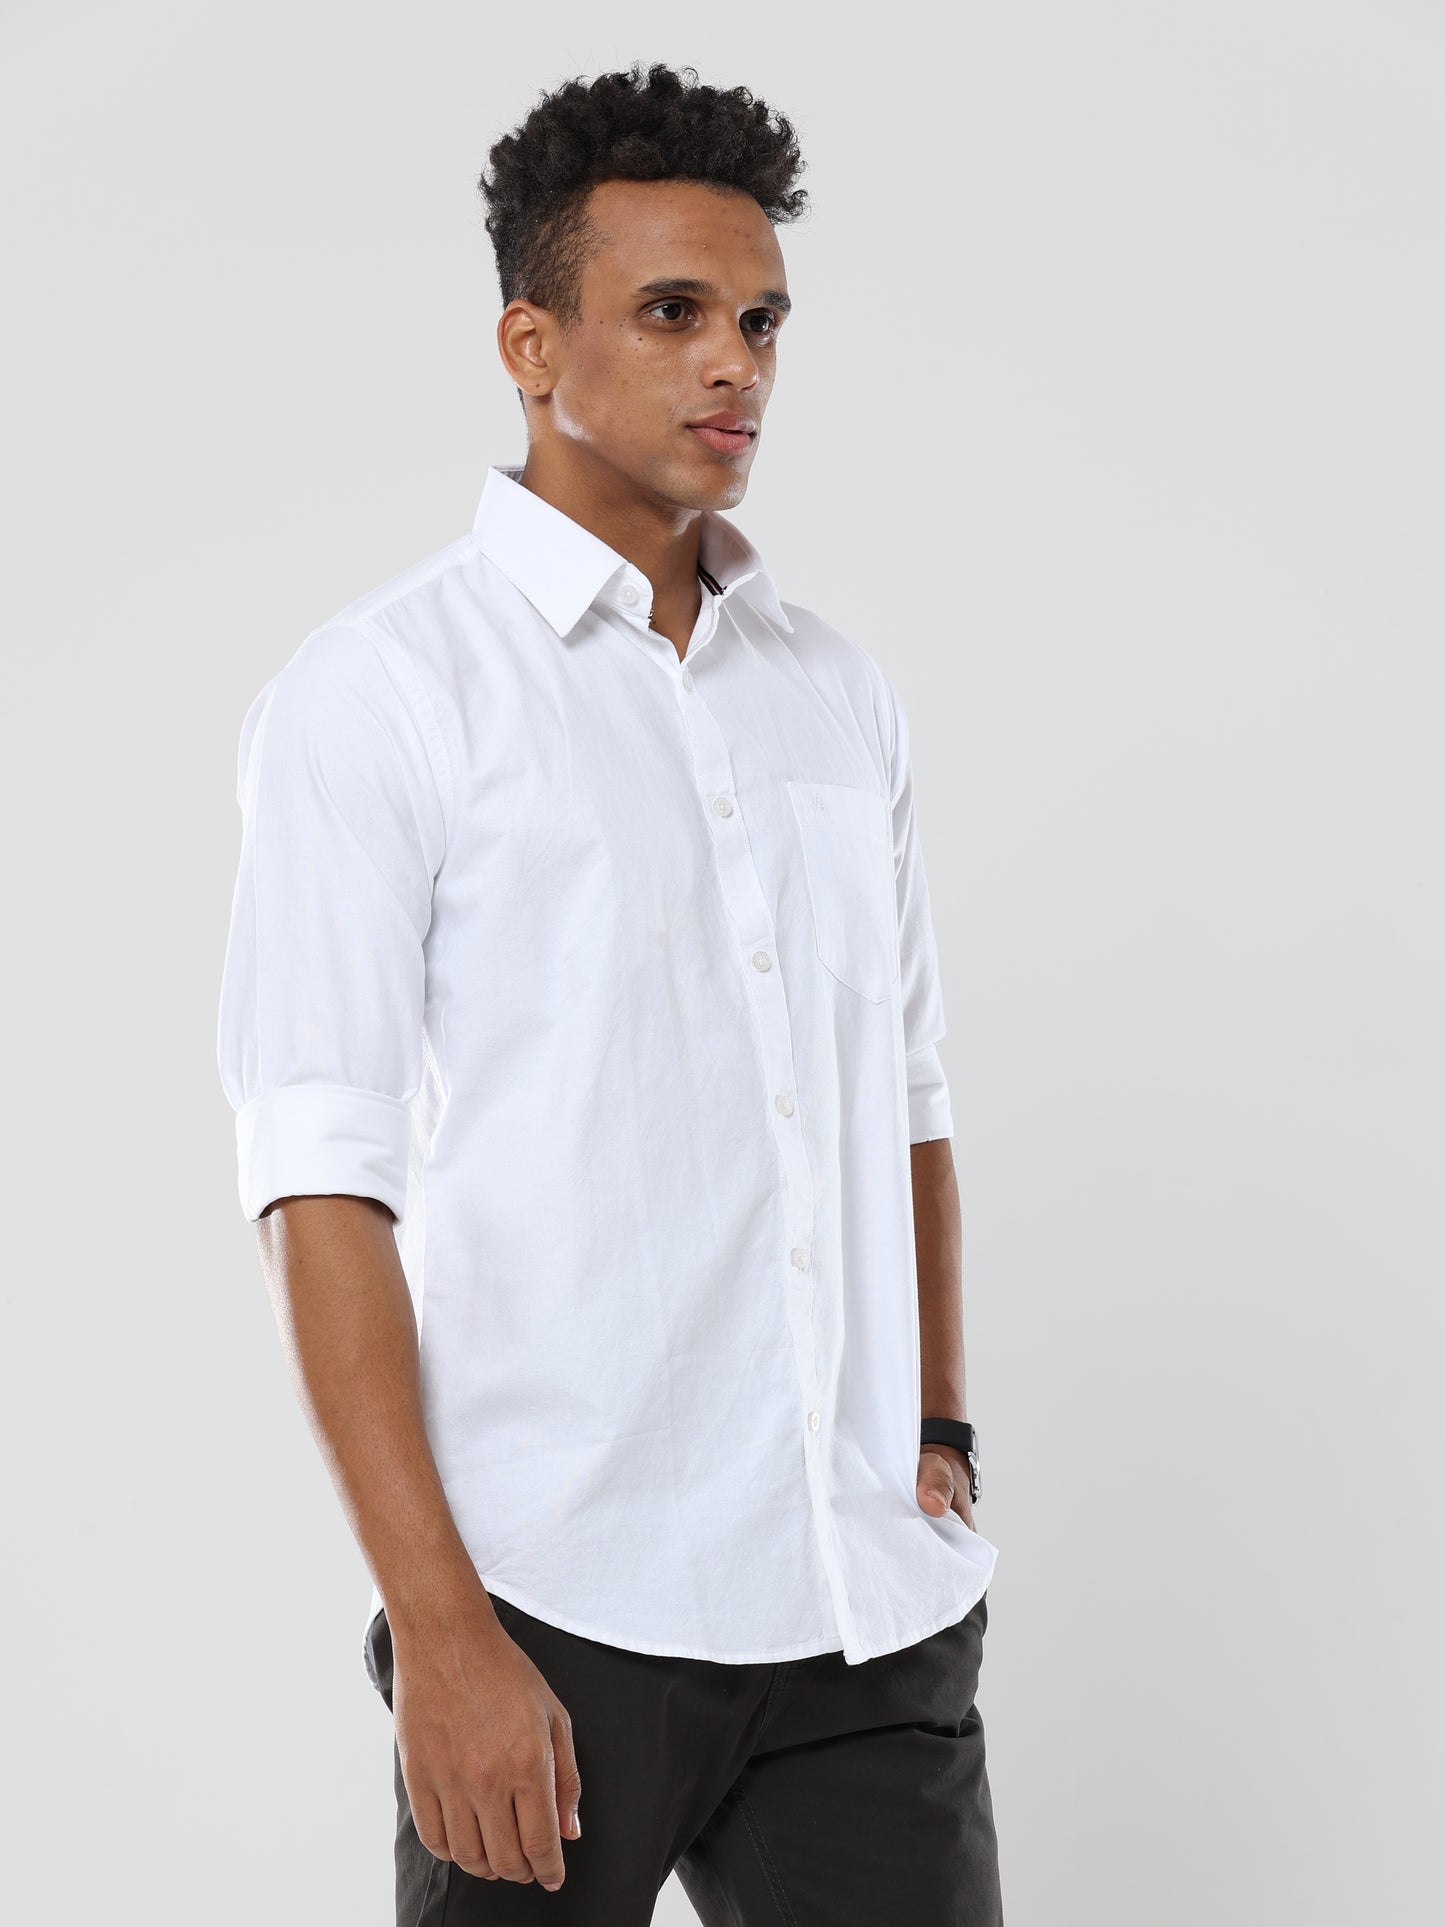 White Plain premium Cotton linen shirt with pocket for men